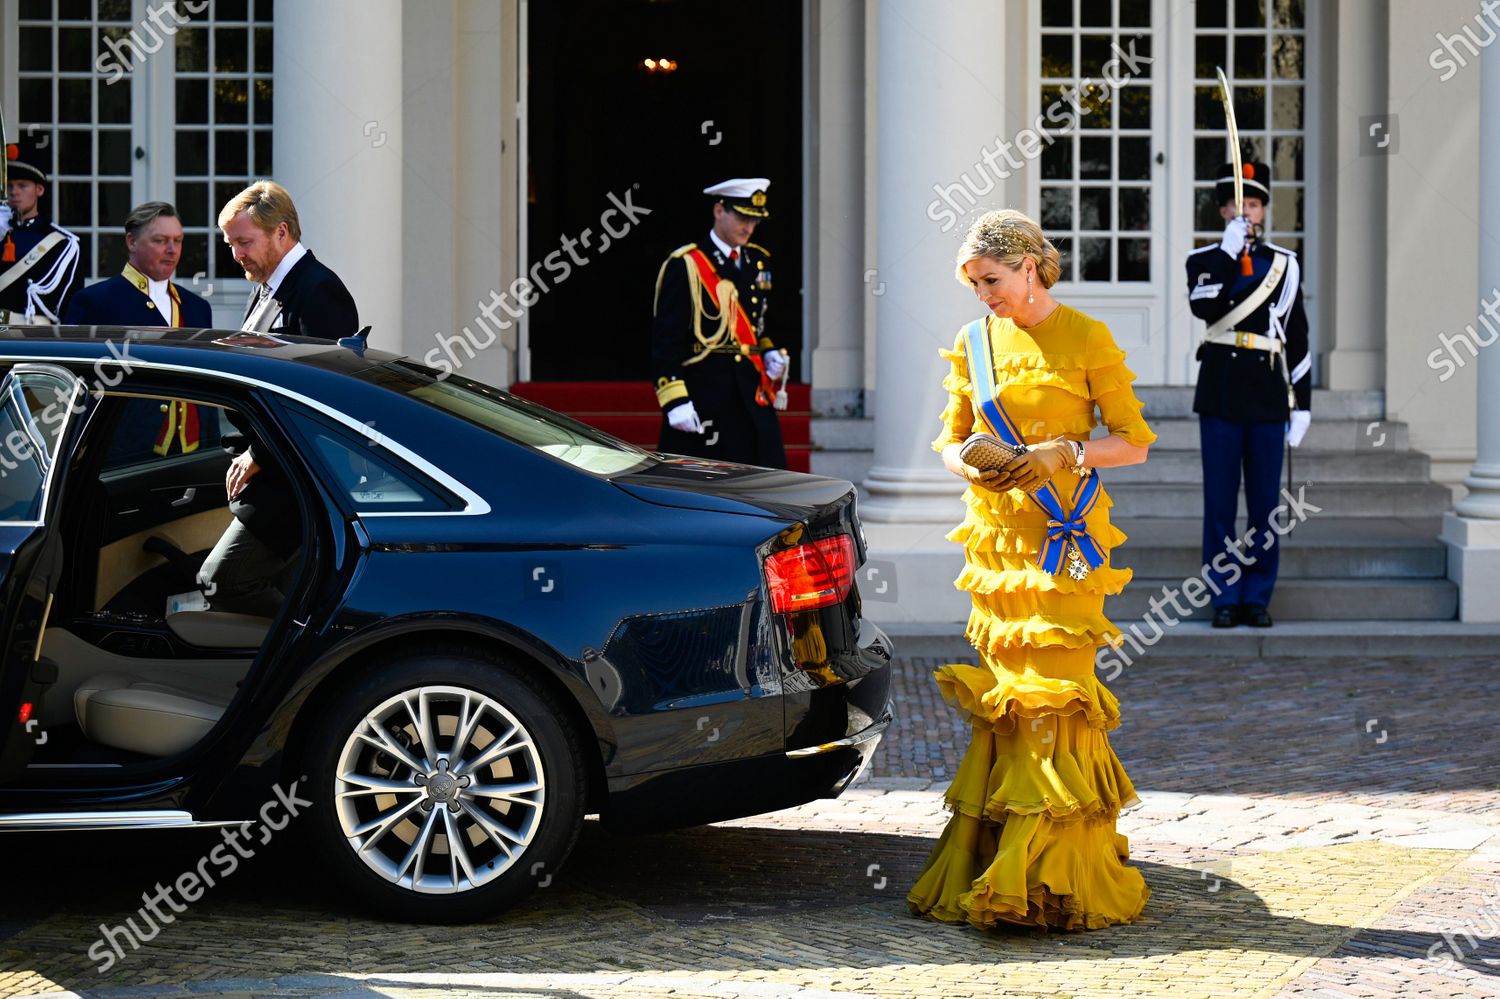 prinsjesdag-ceremony-the-hague-the-netherlands-shutterstock-editorial-10777335b.jpg